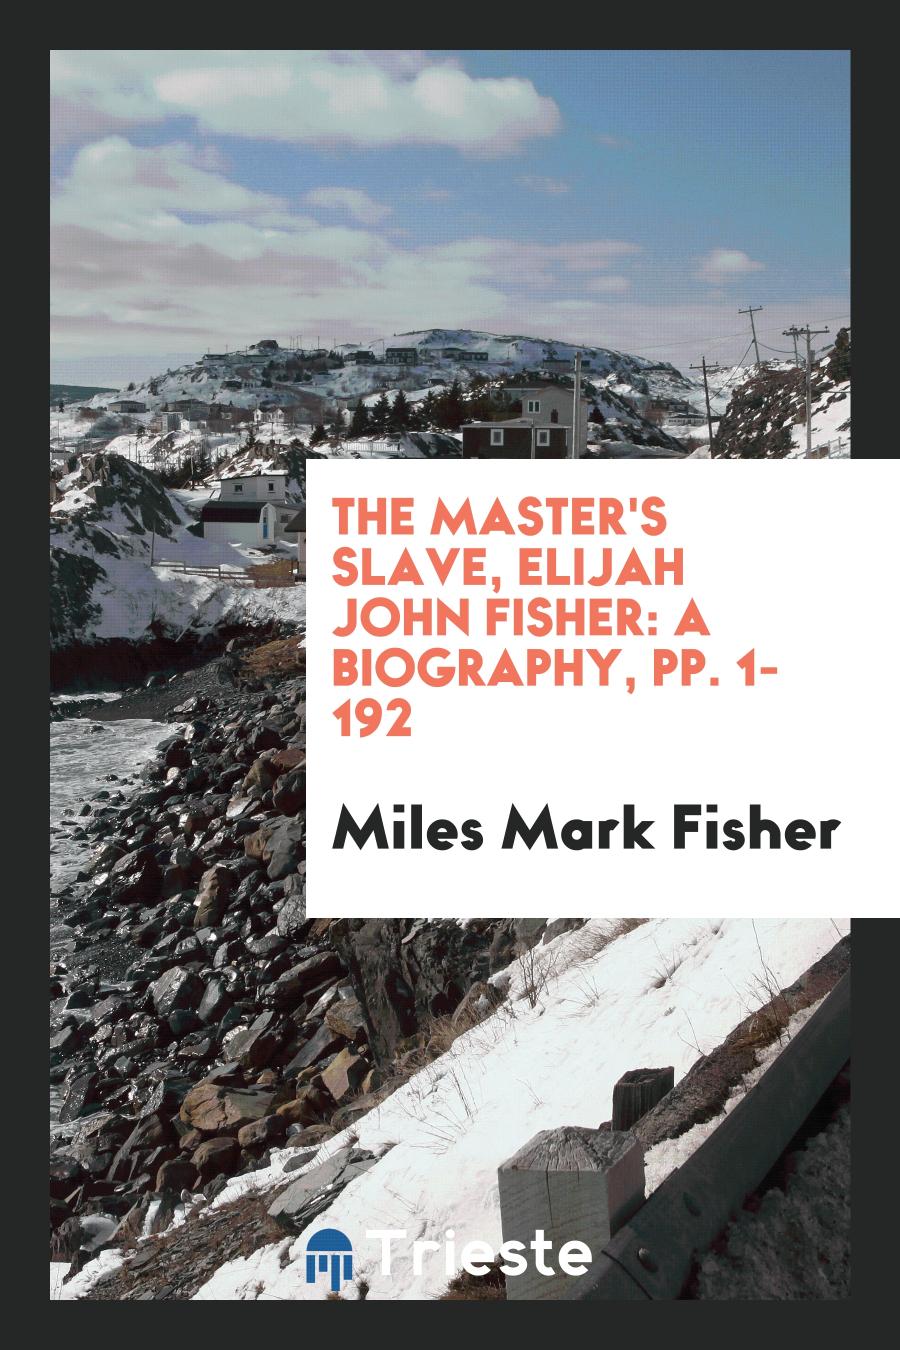 The Master's Slave, Elijah John Fisher: A Biography, pp. 1-192